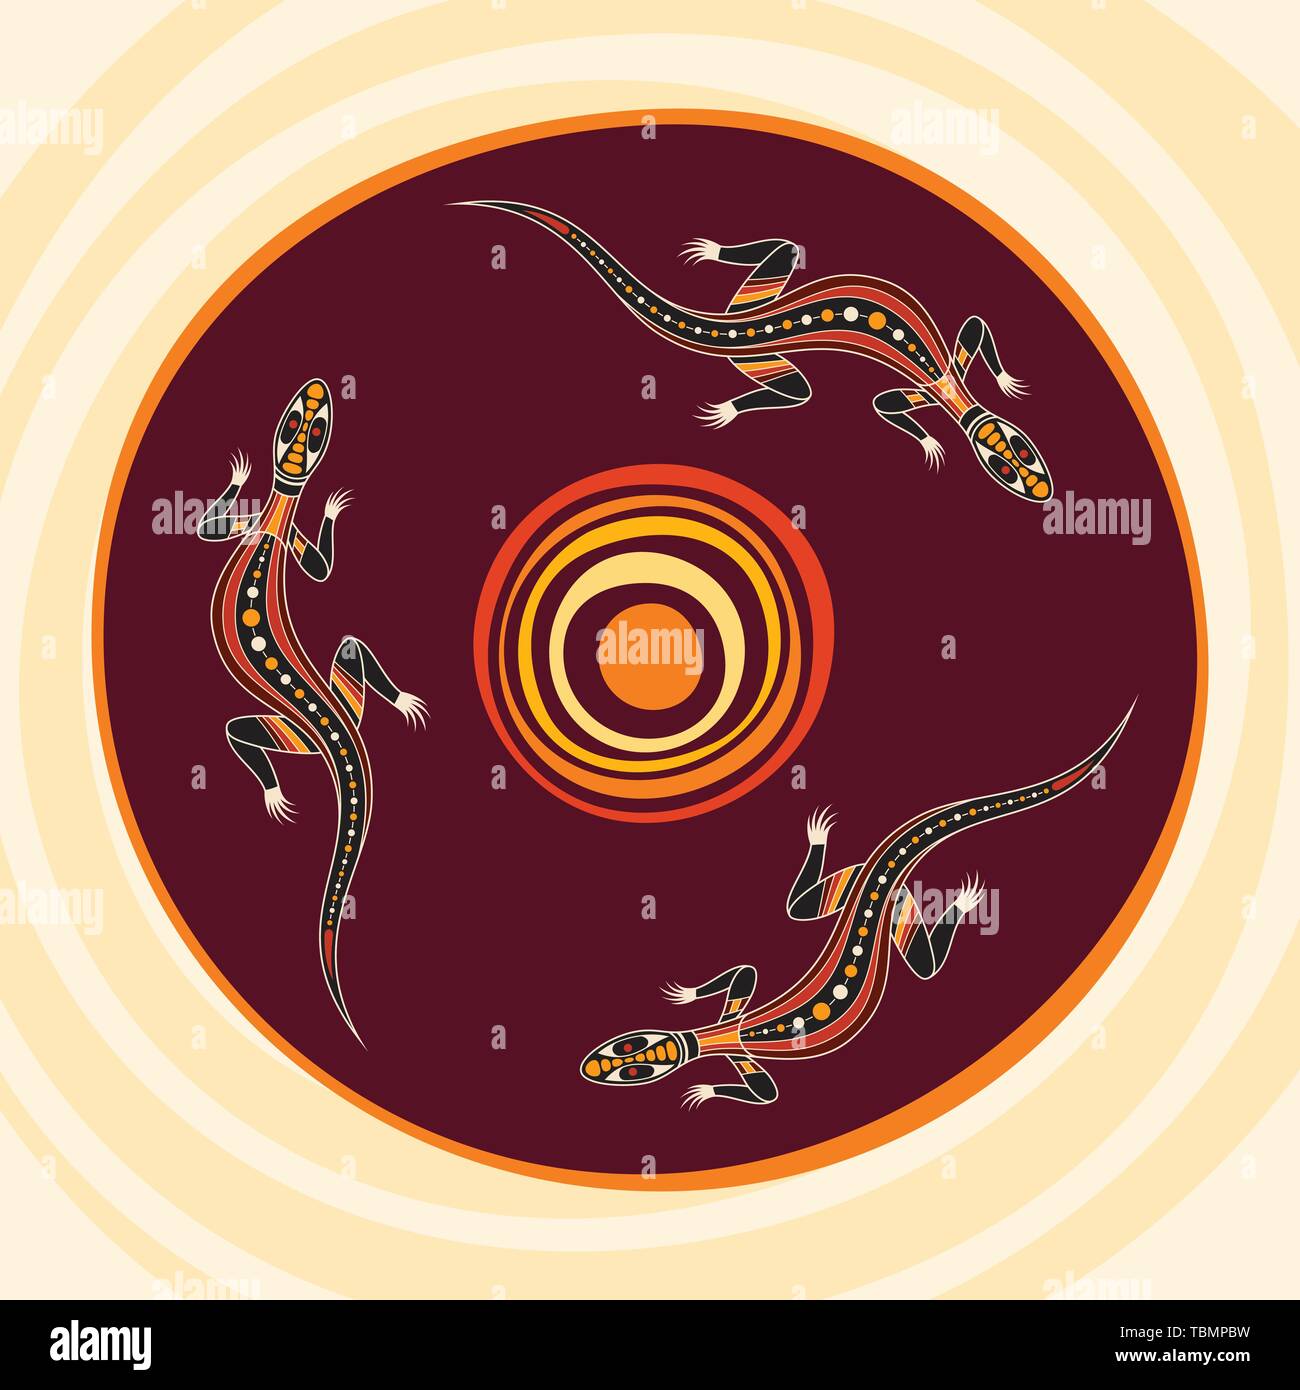 Еhree Eidechsen krabbeln um die Sonne. Aboriginal Art. Vektor abstrakte farbenfrohe Illustrationen. Stock Vektor